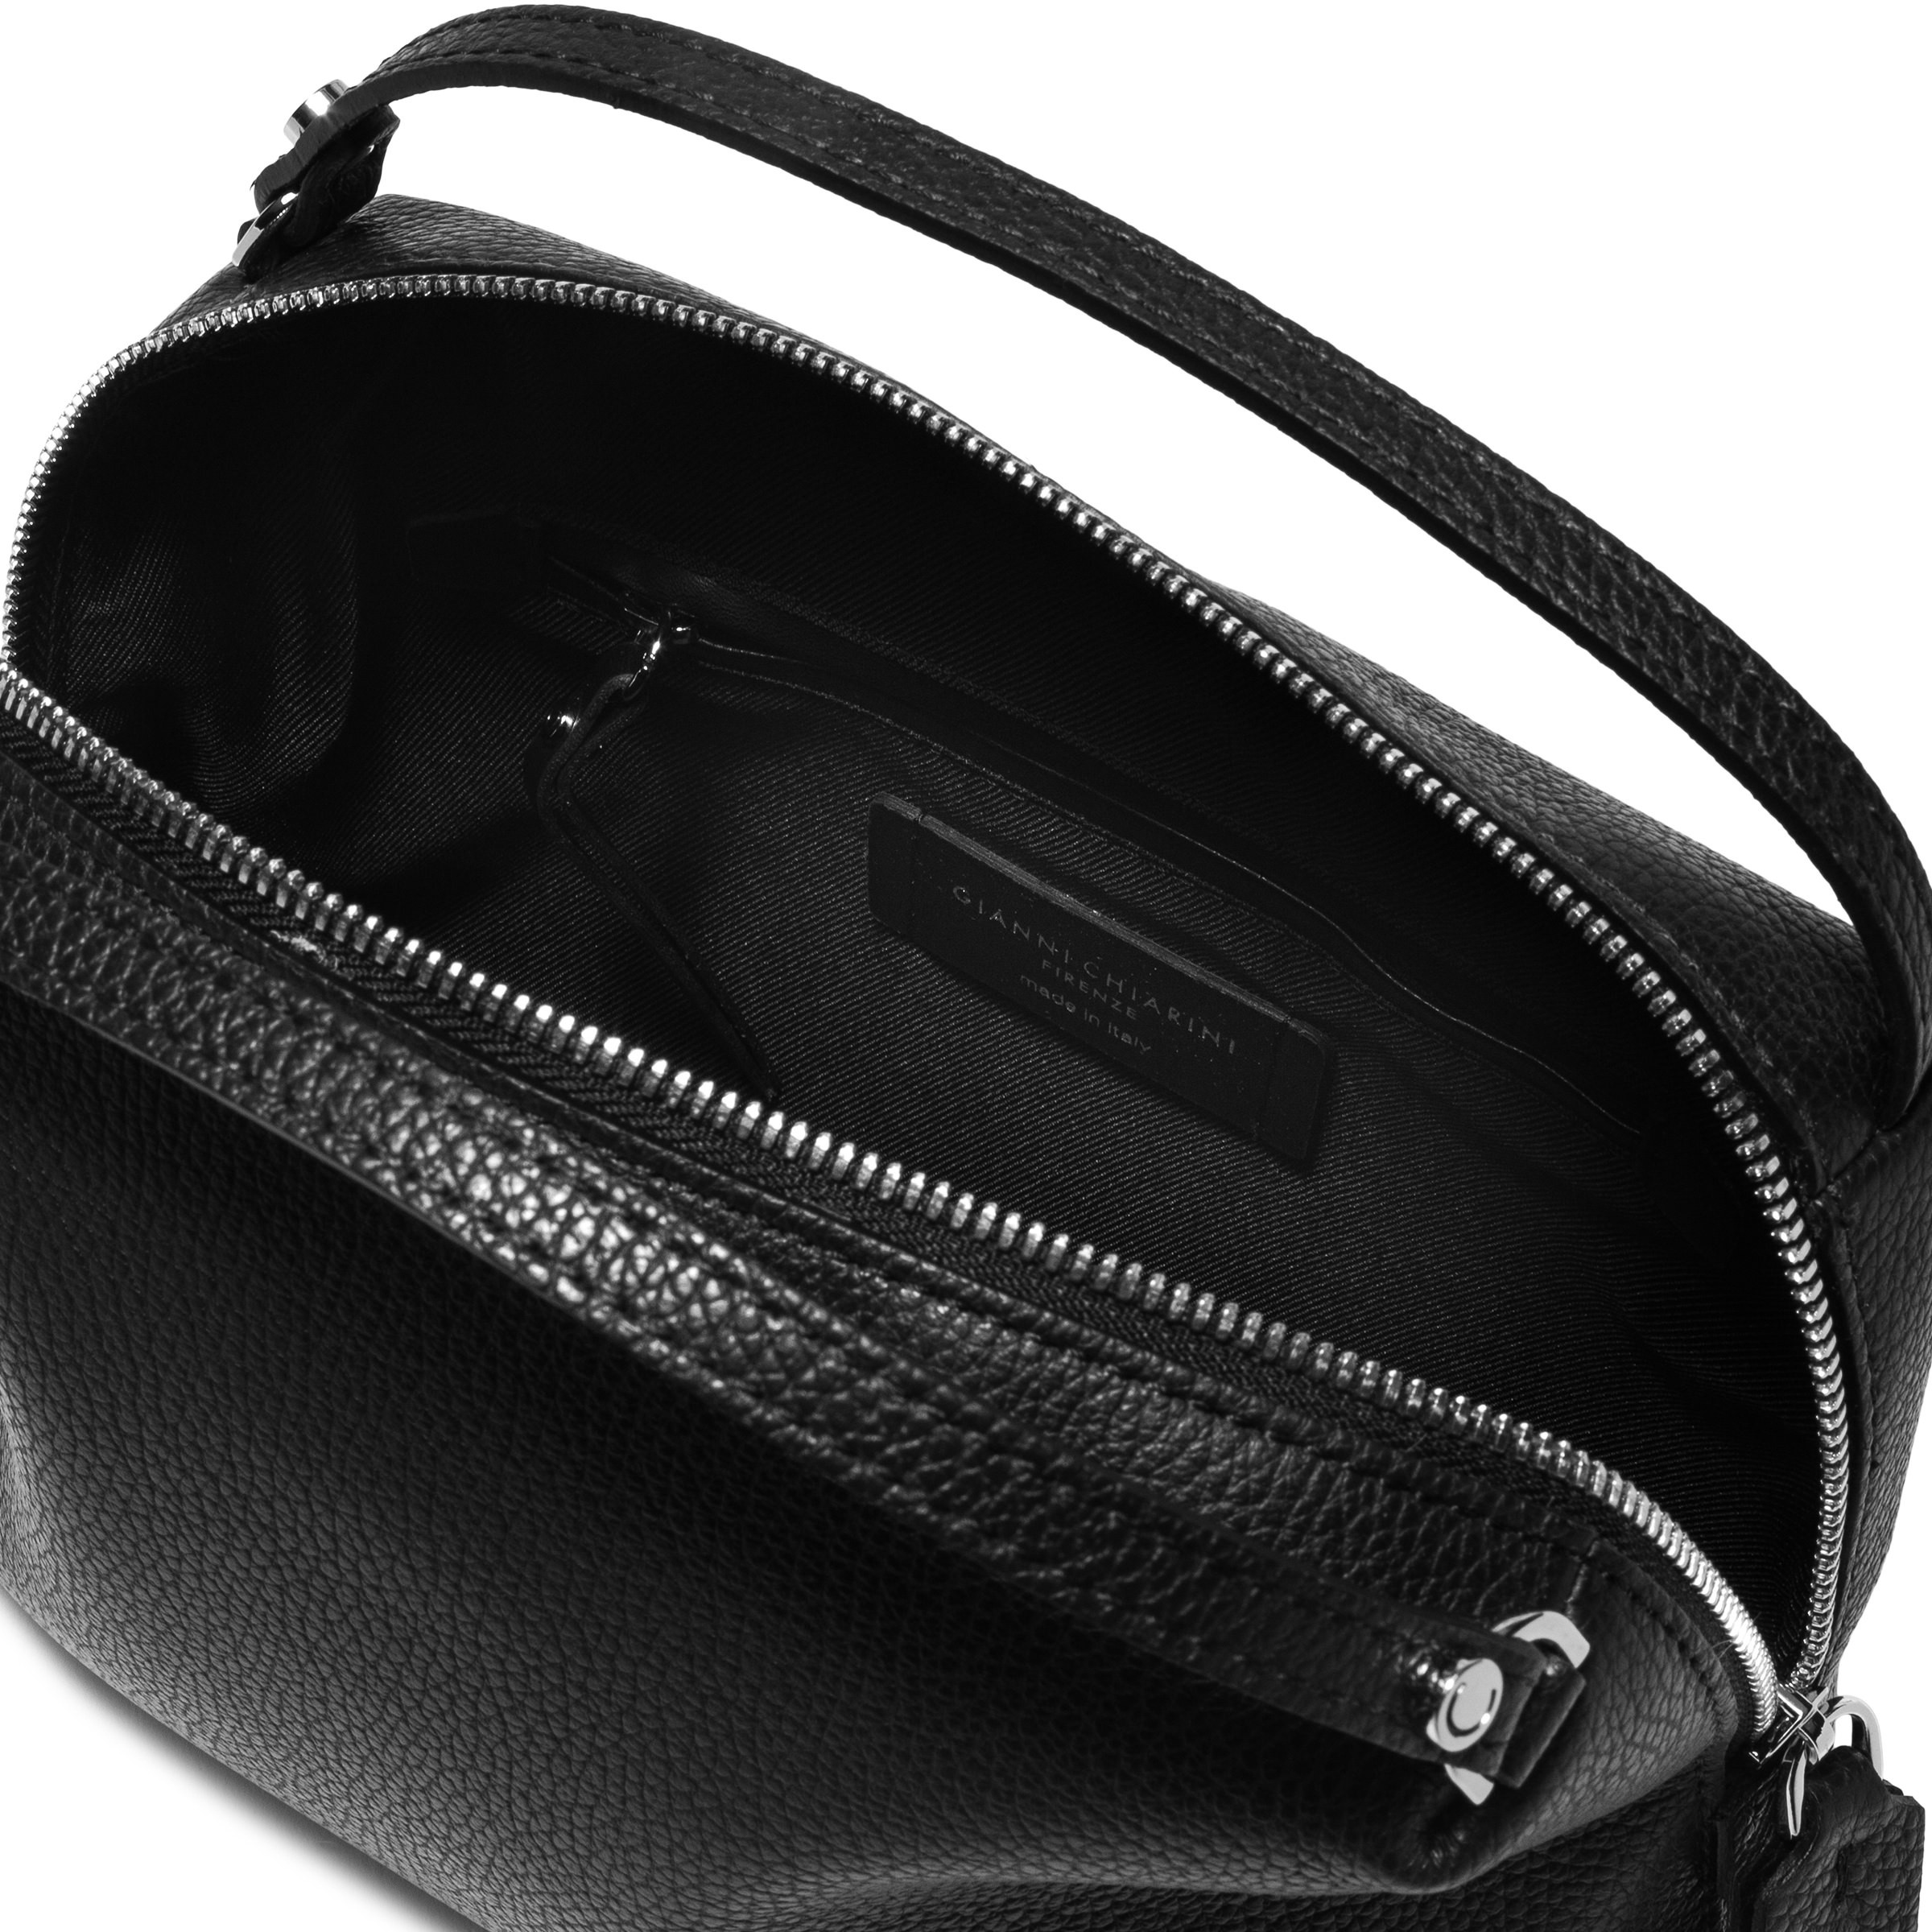 Gianni Chiarini - Alifa bag in leather, Black, large image number 4